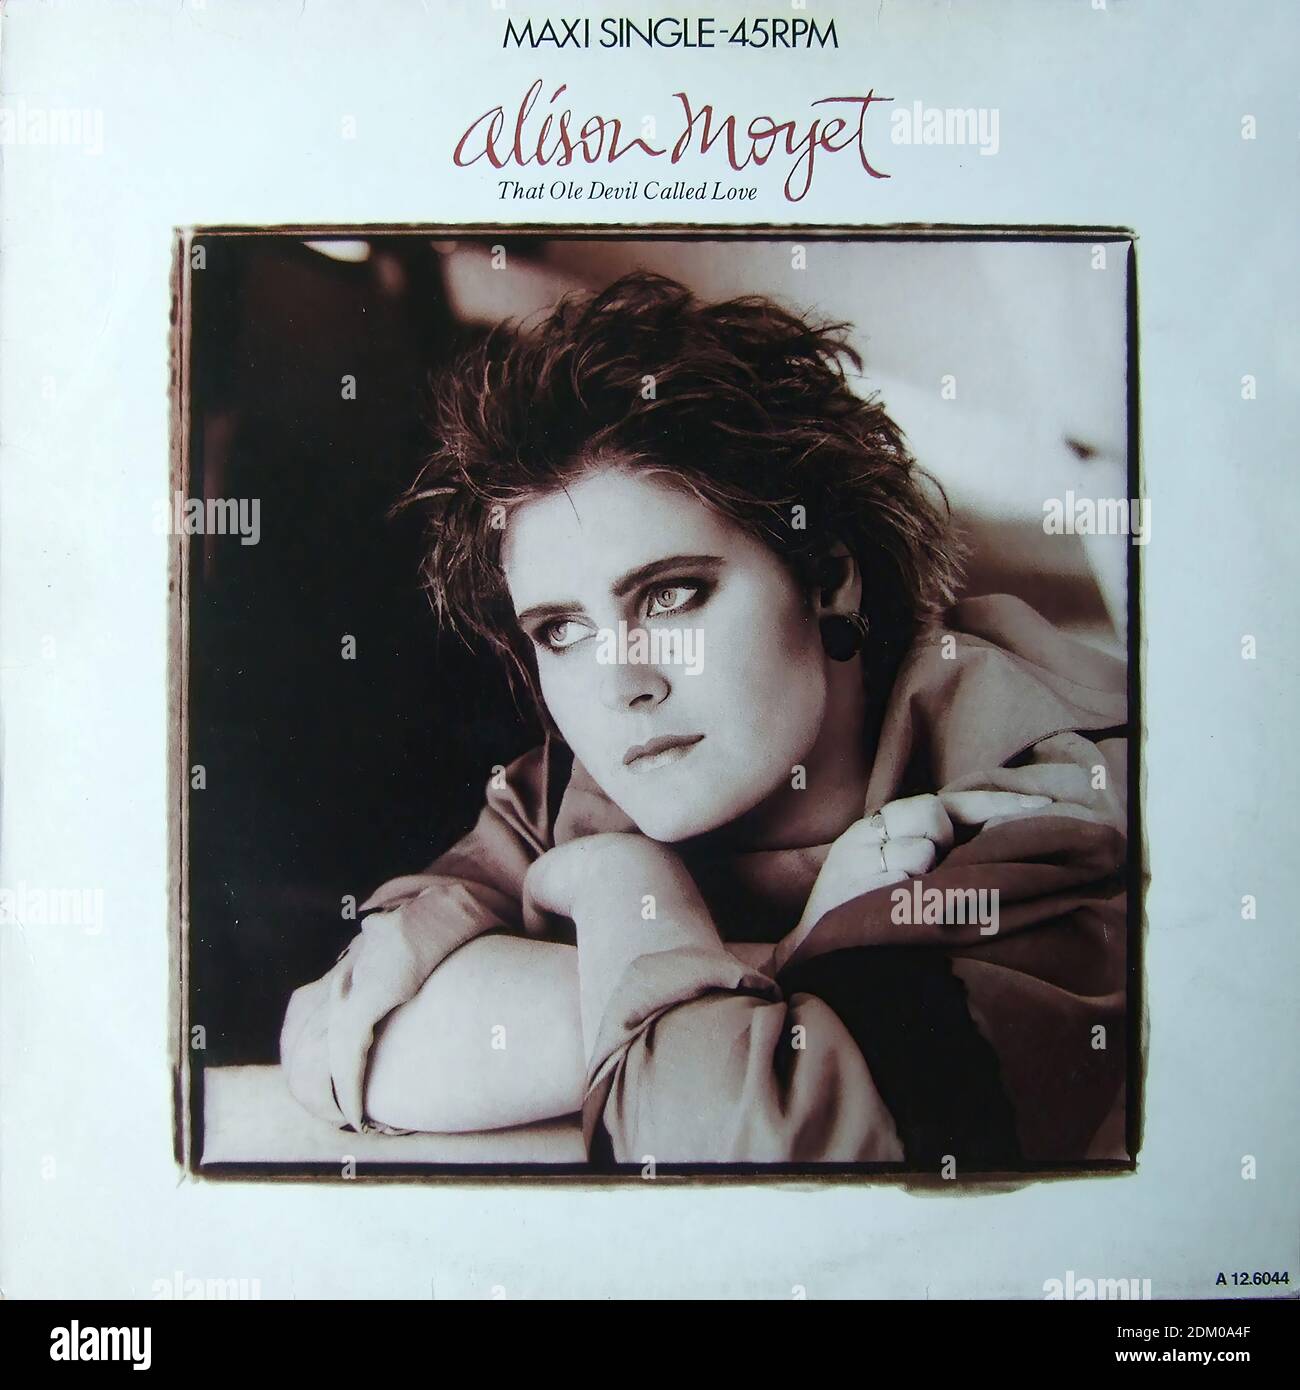 Alison Moyet - That Ole Devil called Love - Maxi Single 45rpm - Vintage  vinyl album cover Stock Photo - Alamy